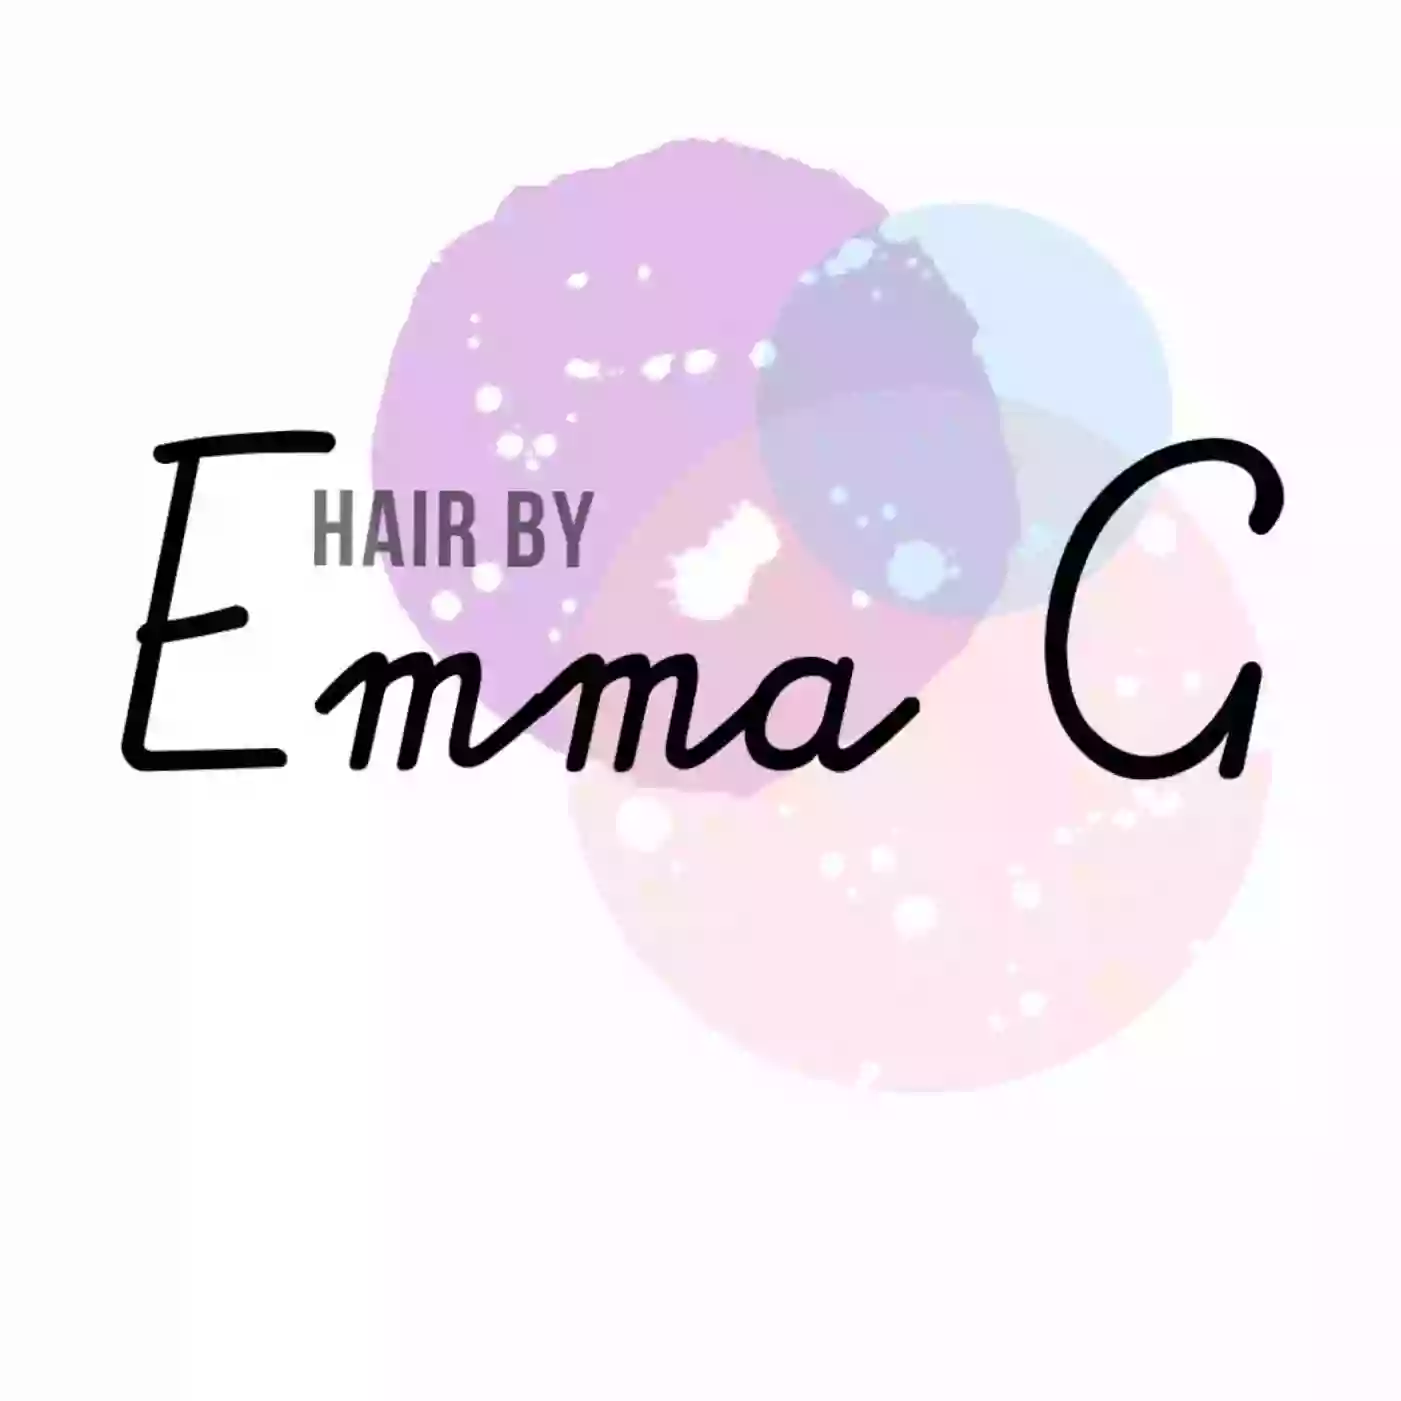 Hair by Emma G